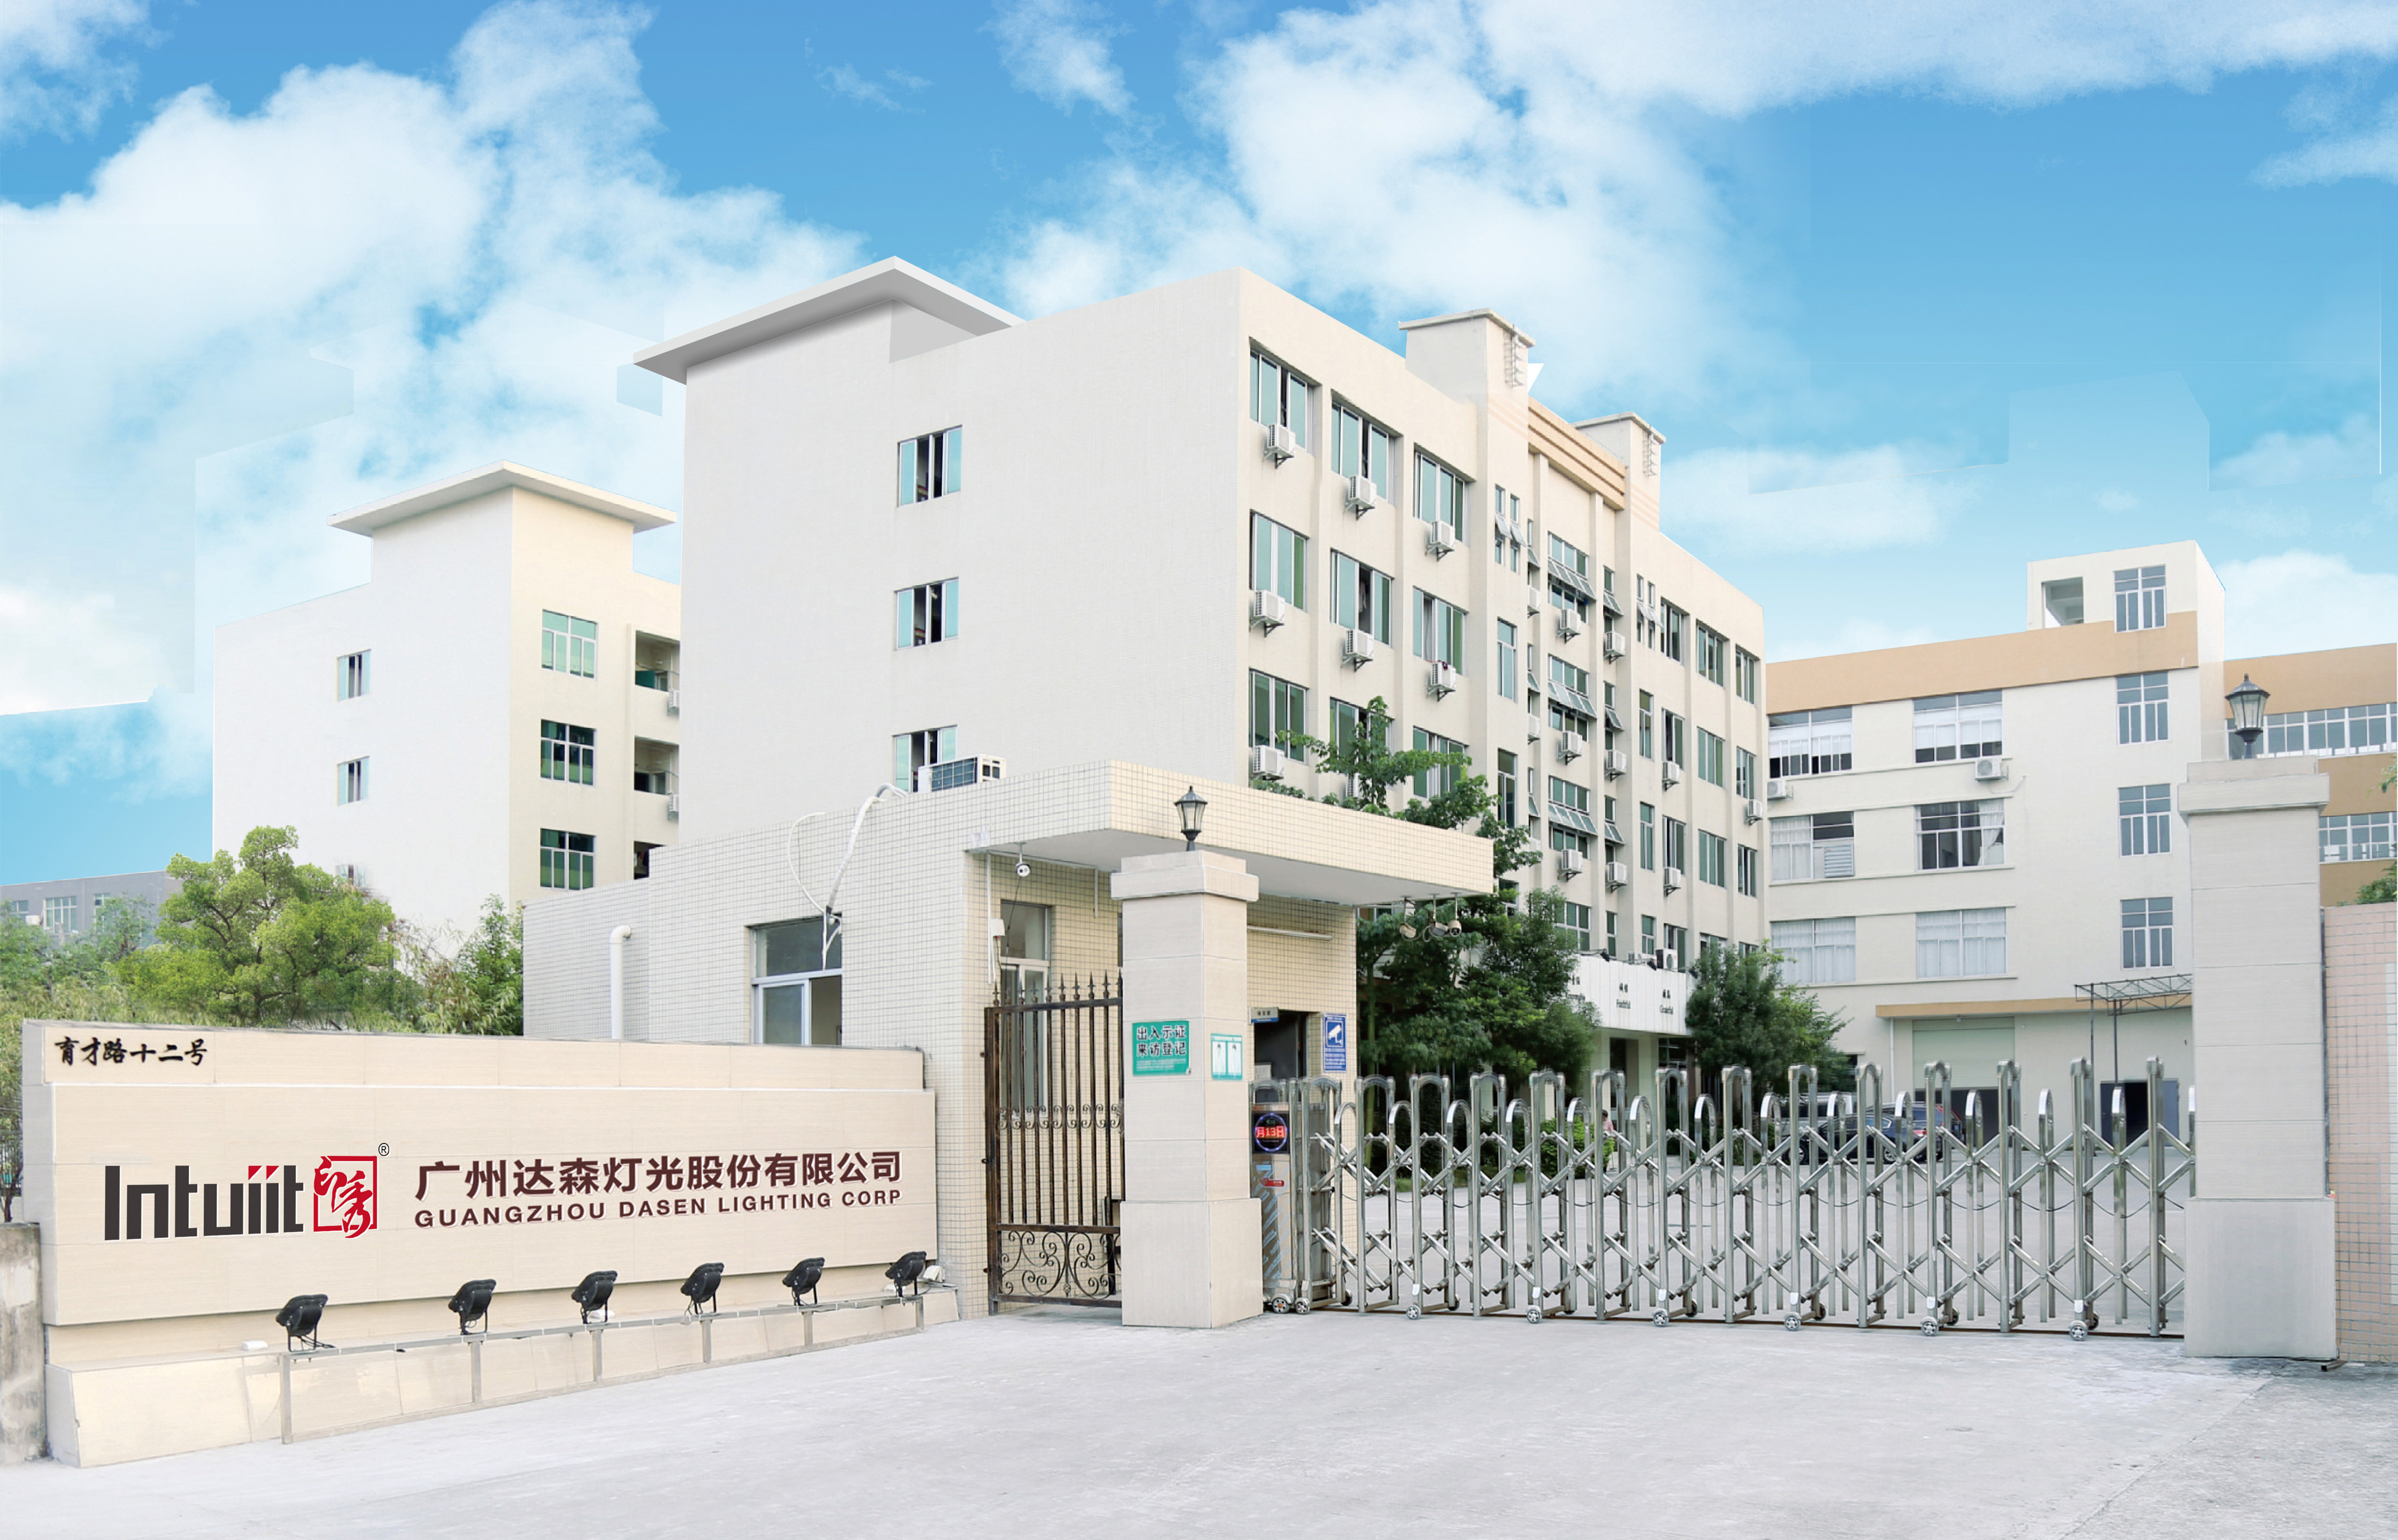 Porcelana Guangzhou Dasen Lighting Corporation Limited Perfil de la compañía